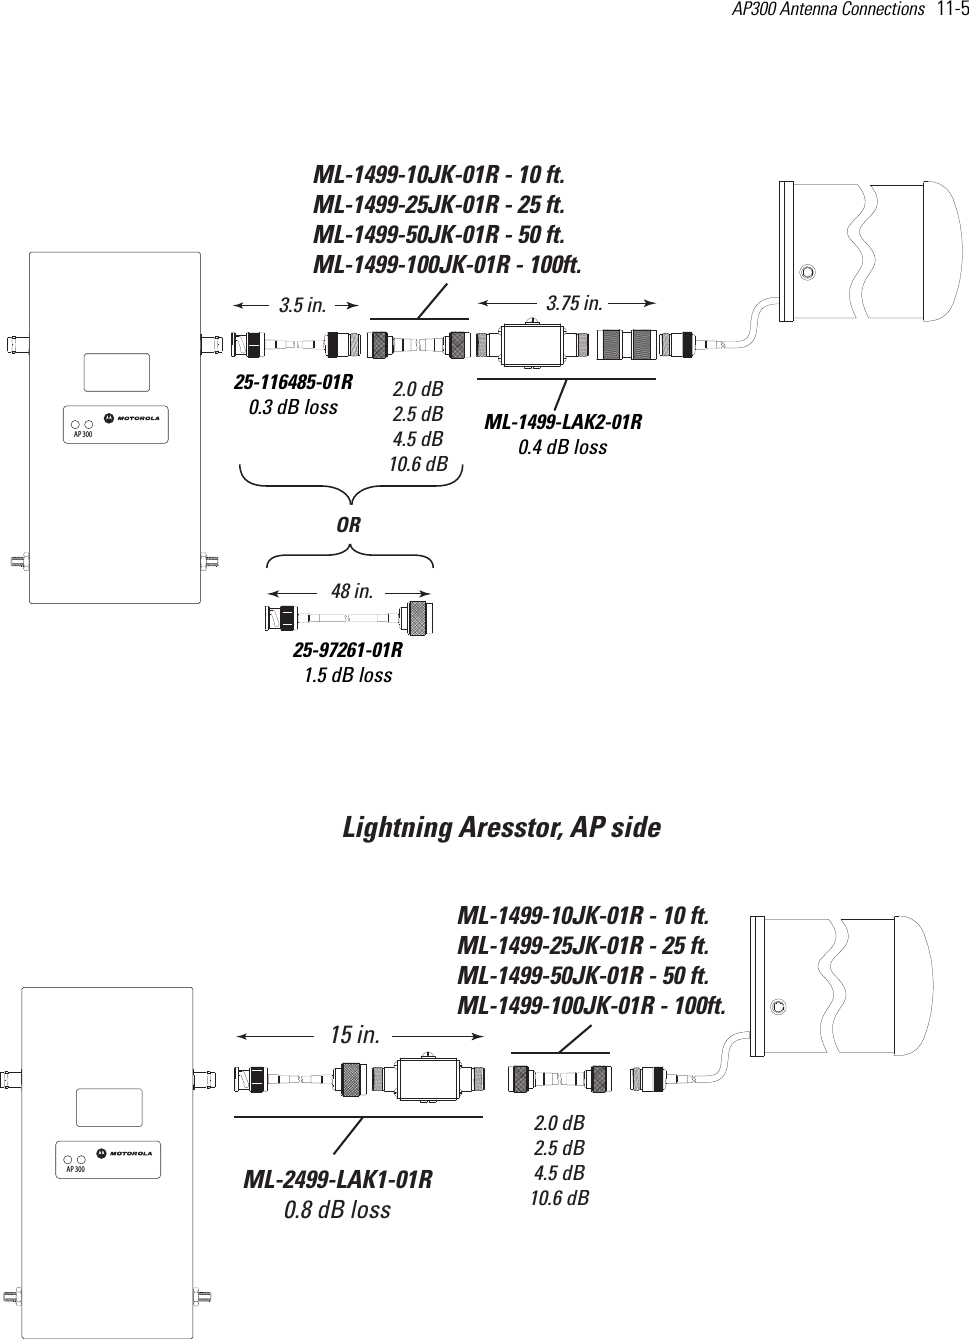 AP300 Antenna Connections   11-5  ML-1499-10JK-01R - 10 ft.ML-1499-25JK-01R - 25 ft.ML-1499-50JK-01R - 50 ft.ML-1499-100JK-01R - 100ft. 2.0 dB2.5 dB4.5 dB10.6 dBML-2499-LAK1-01R0.8 dB loss15 in.Lightning Aresstor, AP sideML-1499-10JK-01R - 10 ft.ML-1499-25JK-01R - 25 ft.ML-1499-50JK-01R - 50 ft.ML-1499-100JK-01R - 100ft. 2.0 dB2.5 dB4.5 dB10.6 dB25-97261-01R1.5 dB loss48 in.ORML-1499-LAK2-01R0.4 dB loss3.75 in.AP 300AP 30025-116485-01R0.3 dB loss3.5 in.